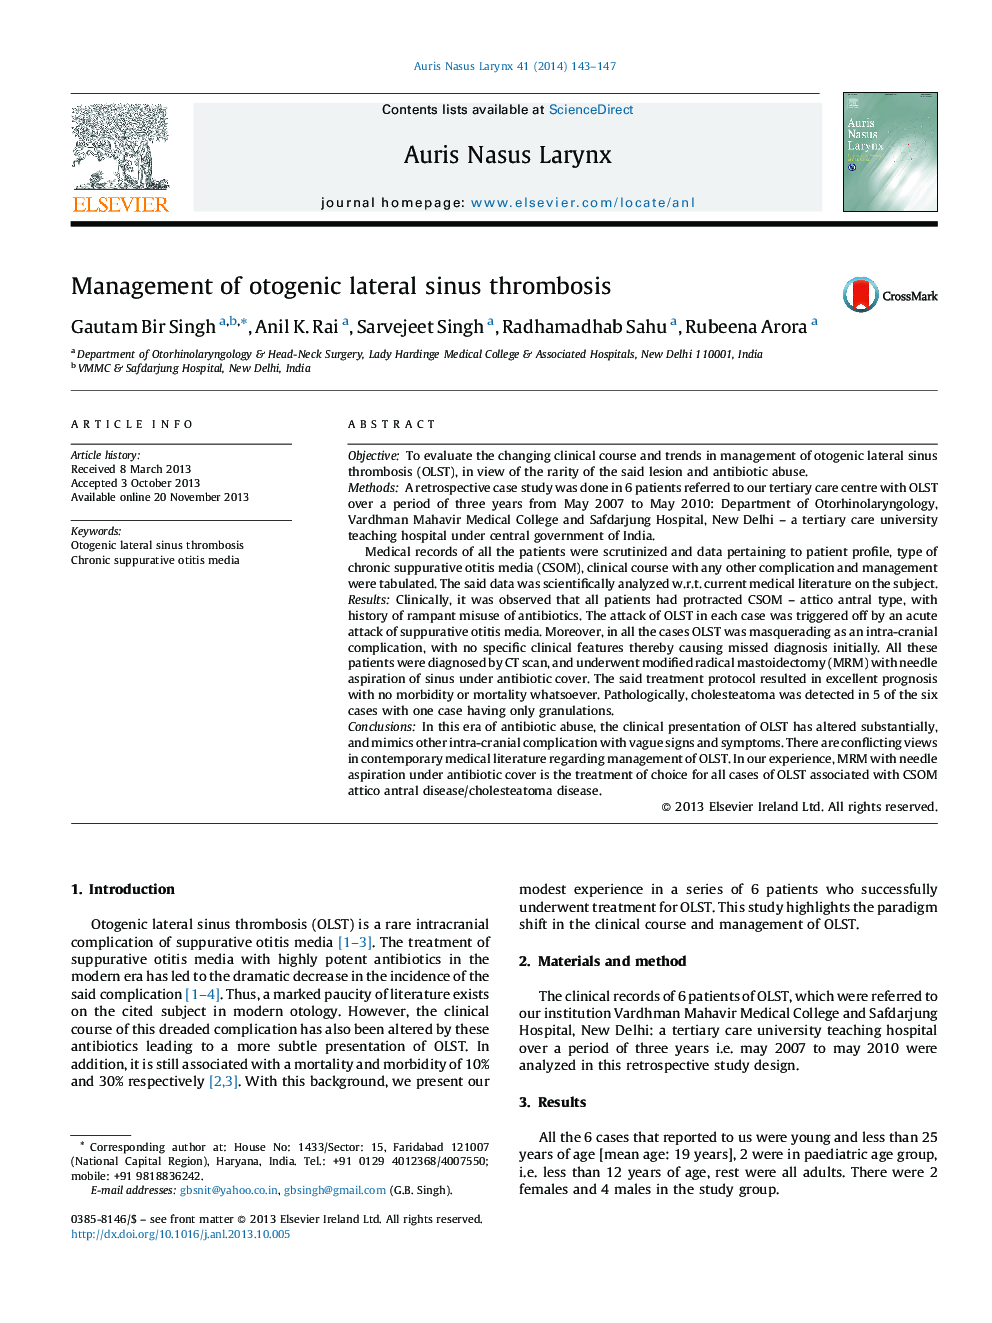 Management of otogenic lateral sinus thrombosis